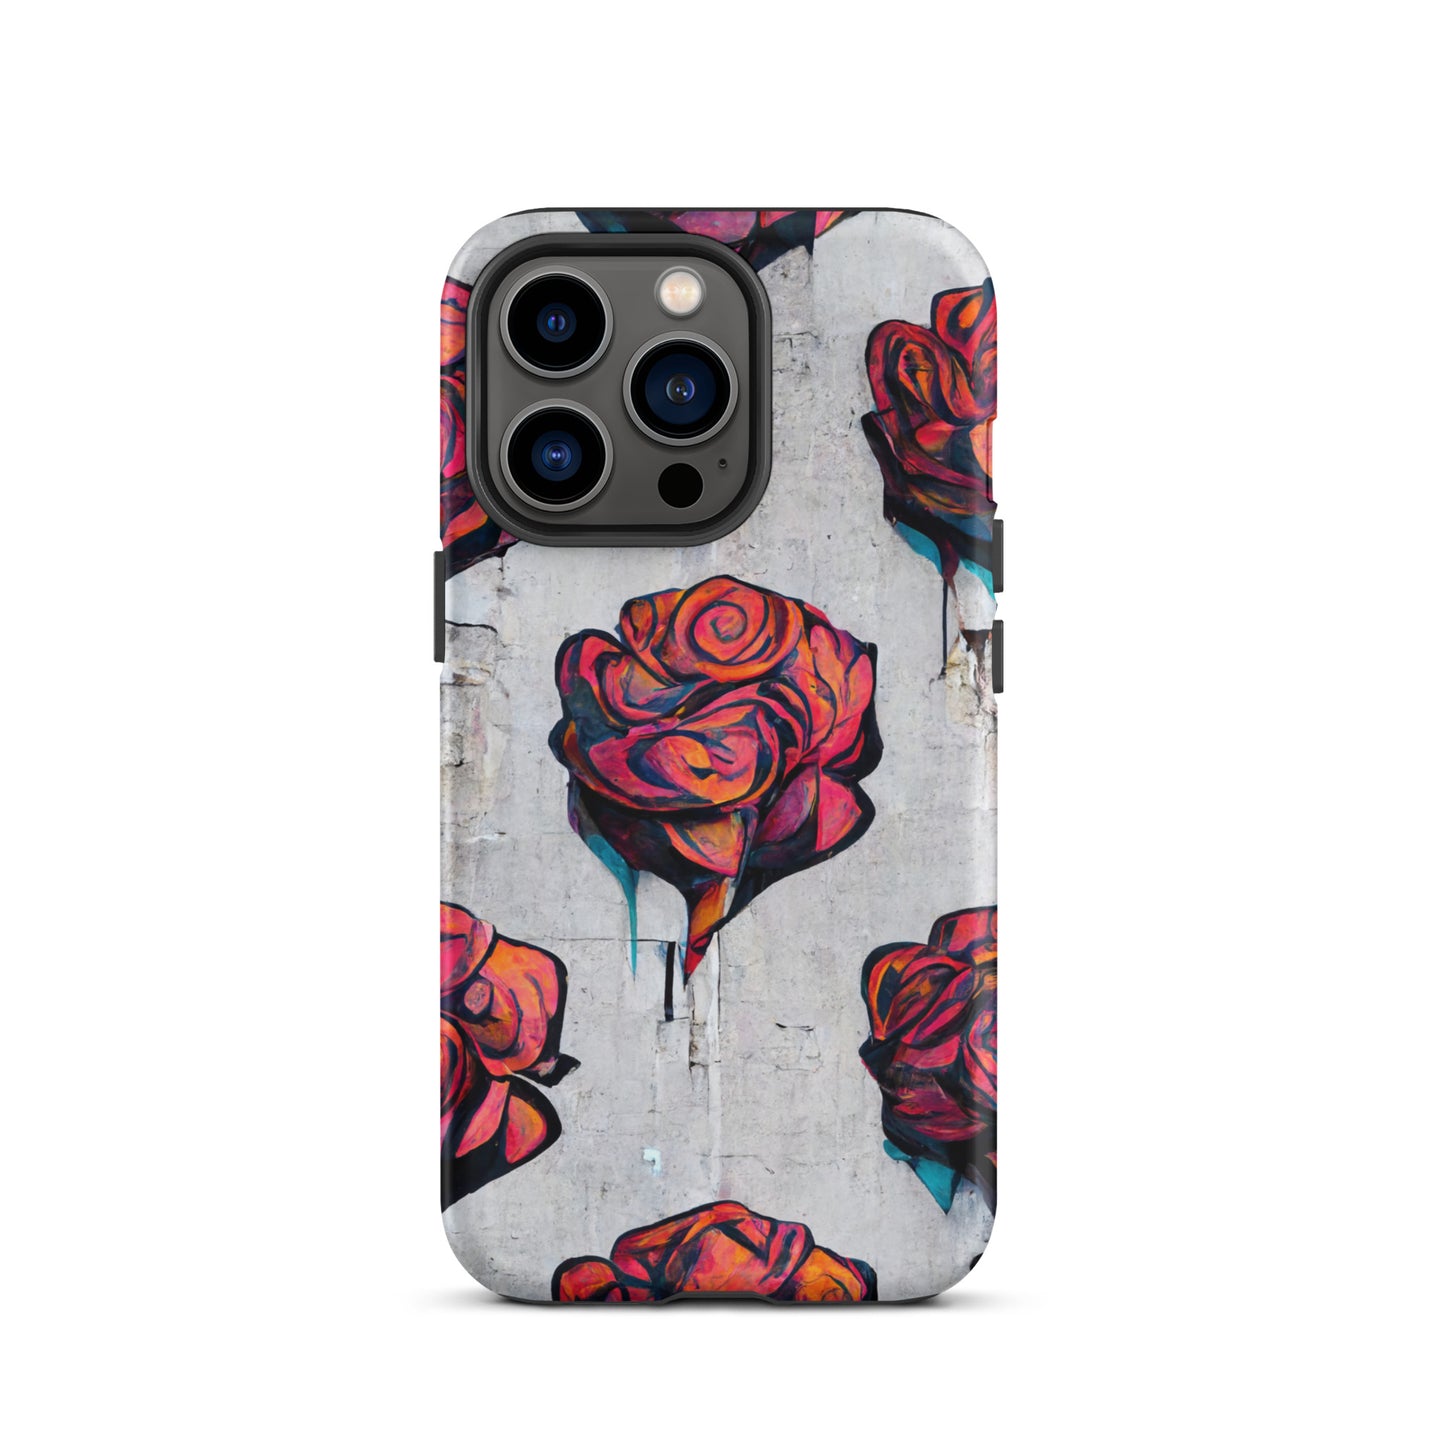 Neduz Designs Artified Graffiti Roses Tough Case for iPhone®